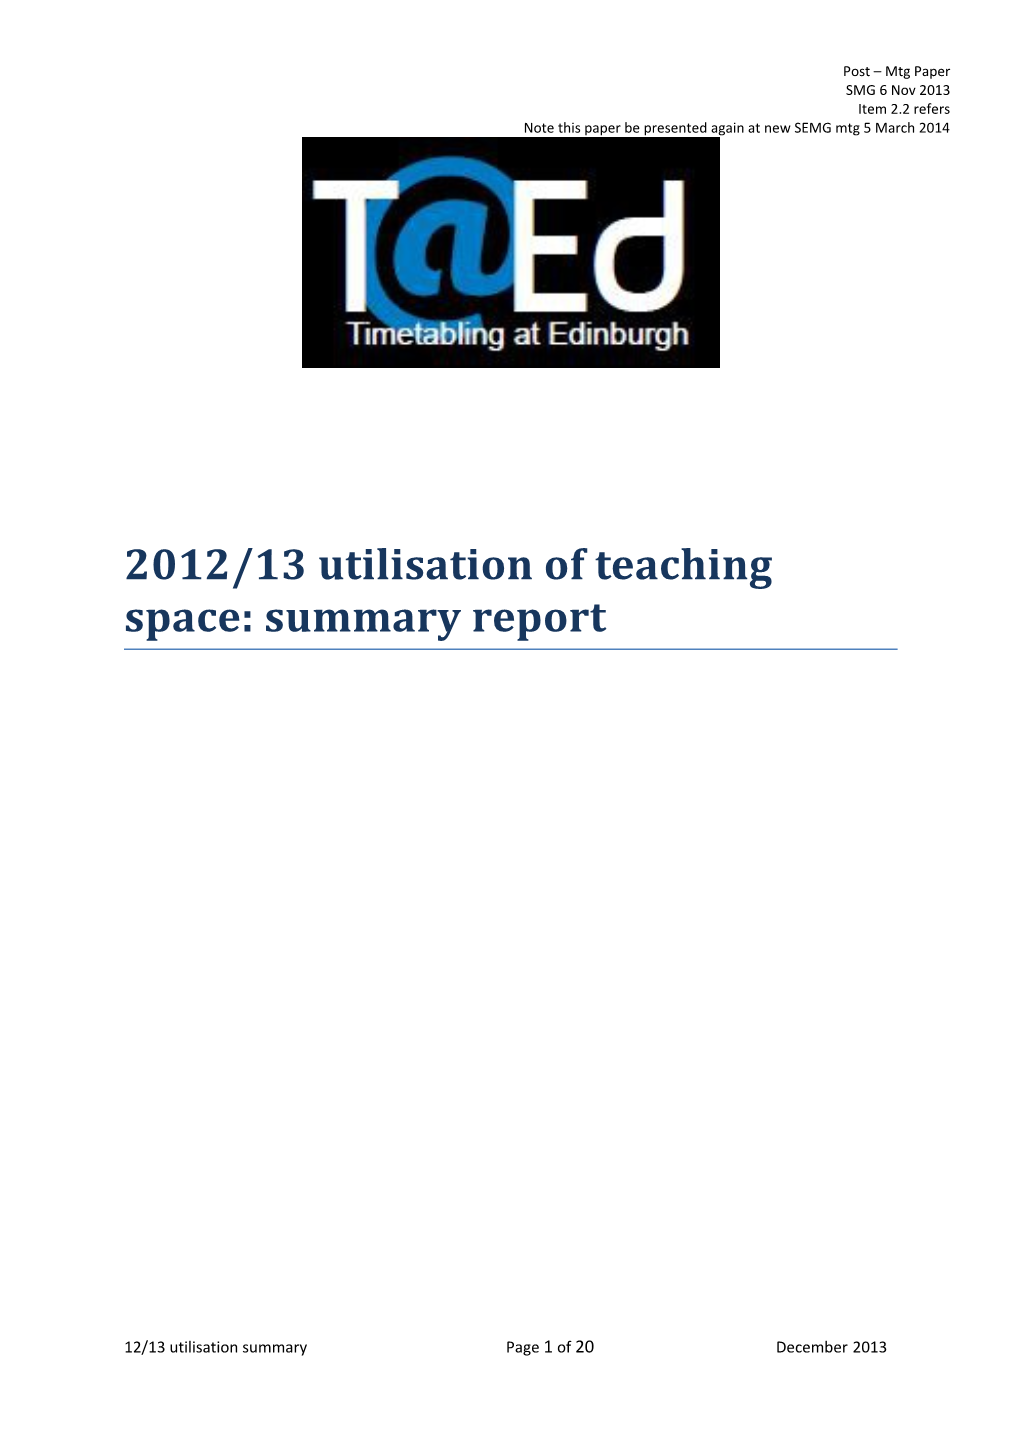 2012/13 Utilisation of Teaching Space: Summary Report